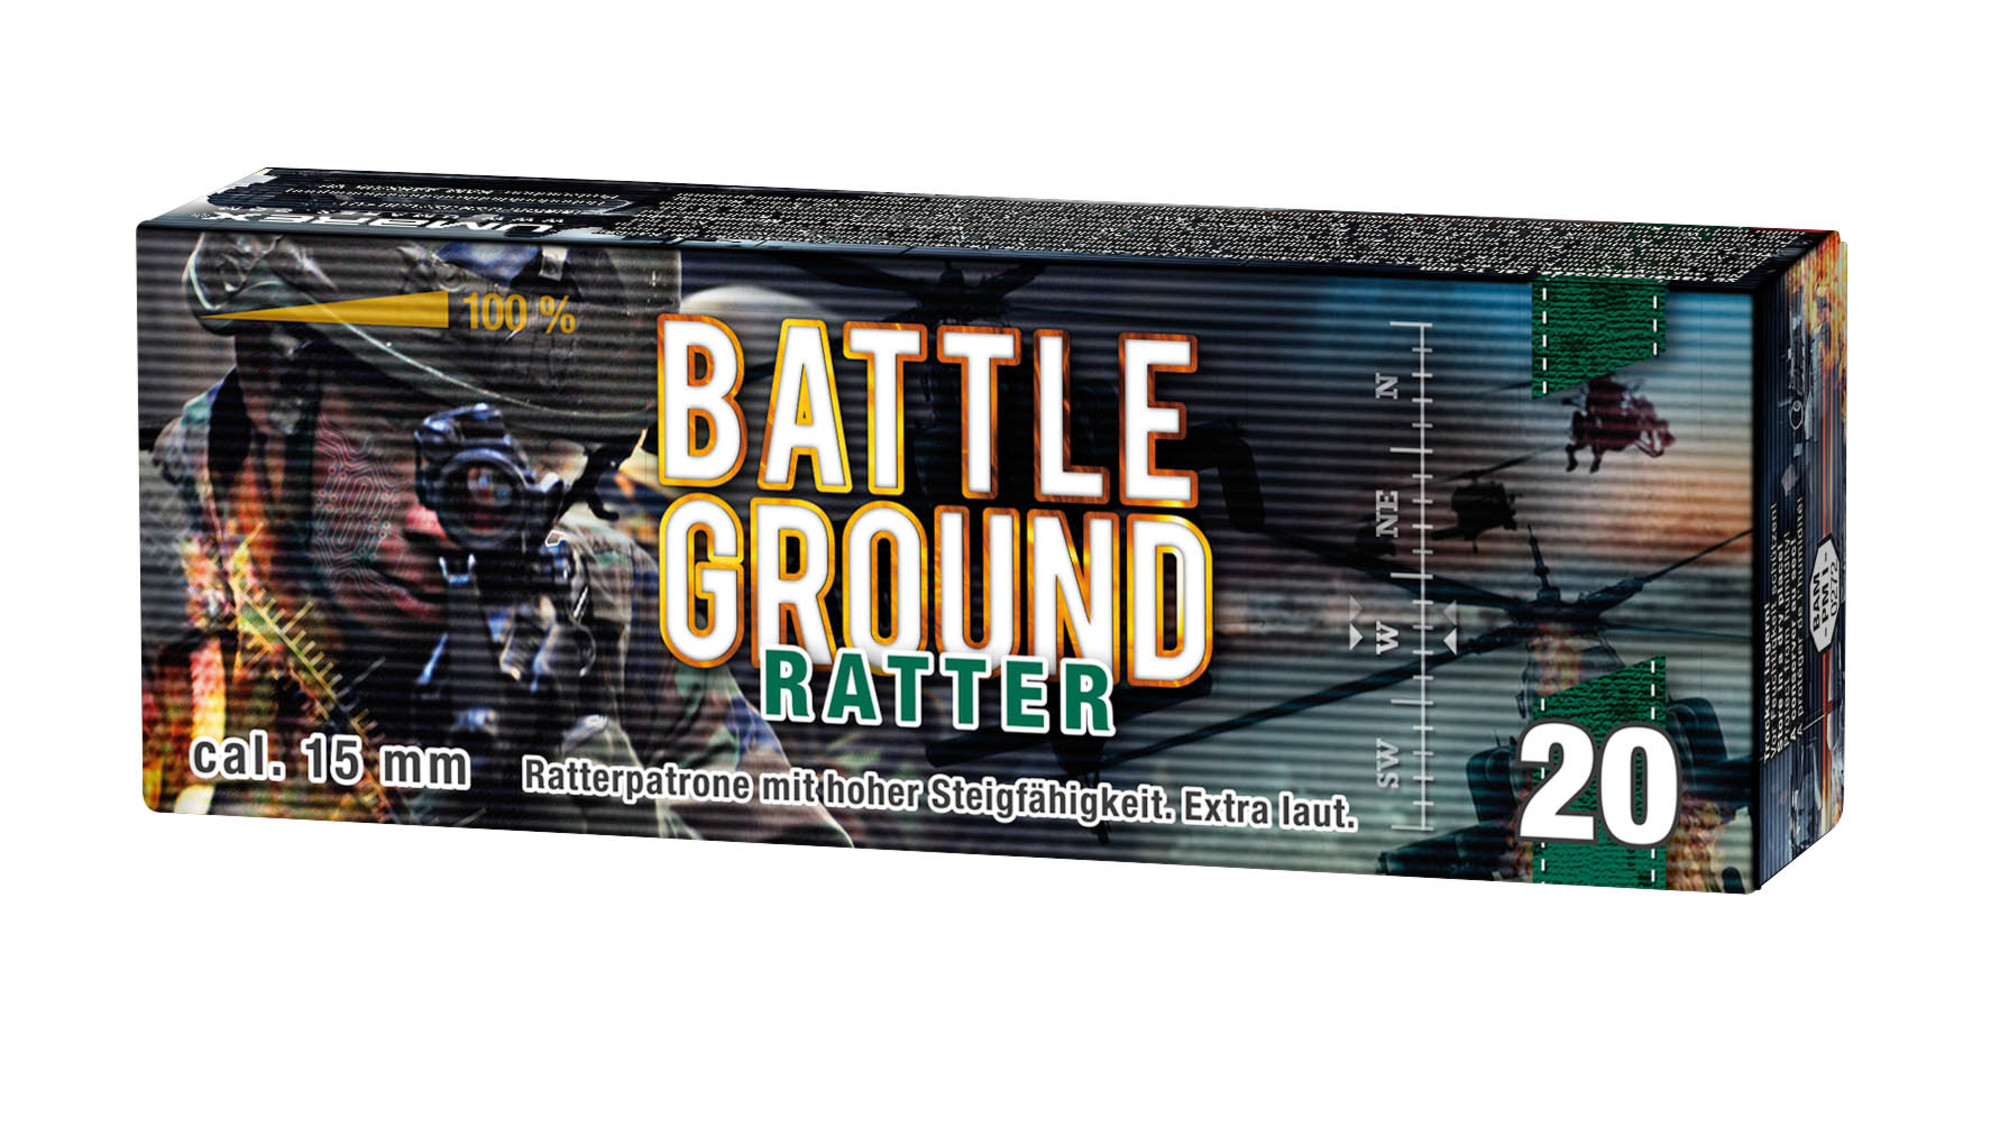 Umarex Battle Ground Ratter art.57019344